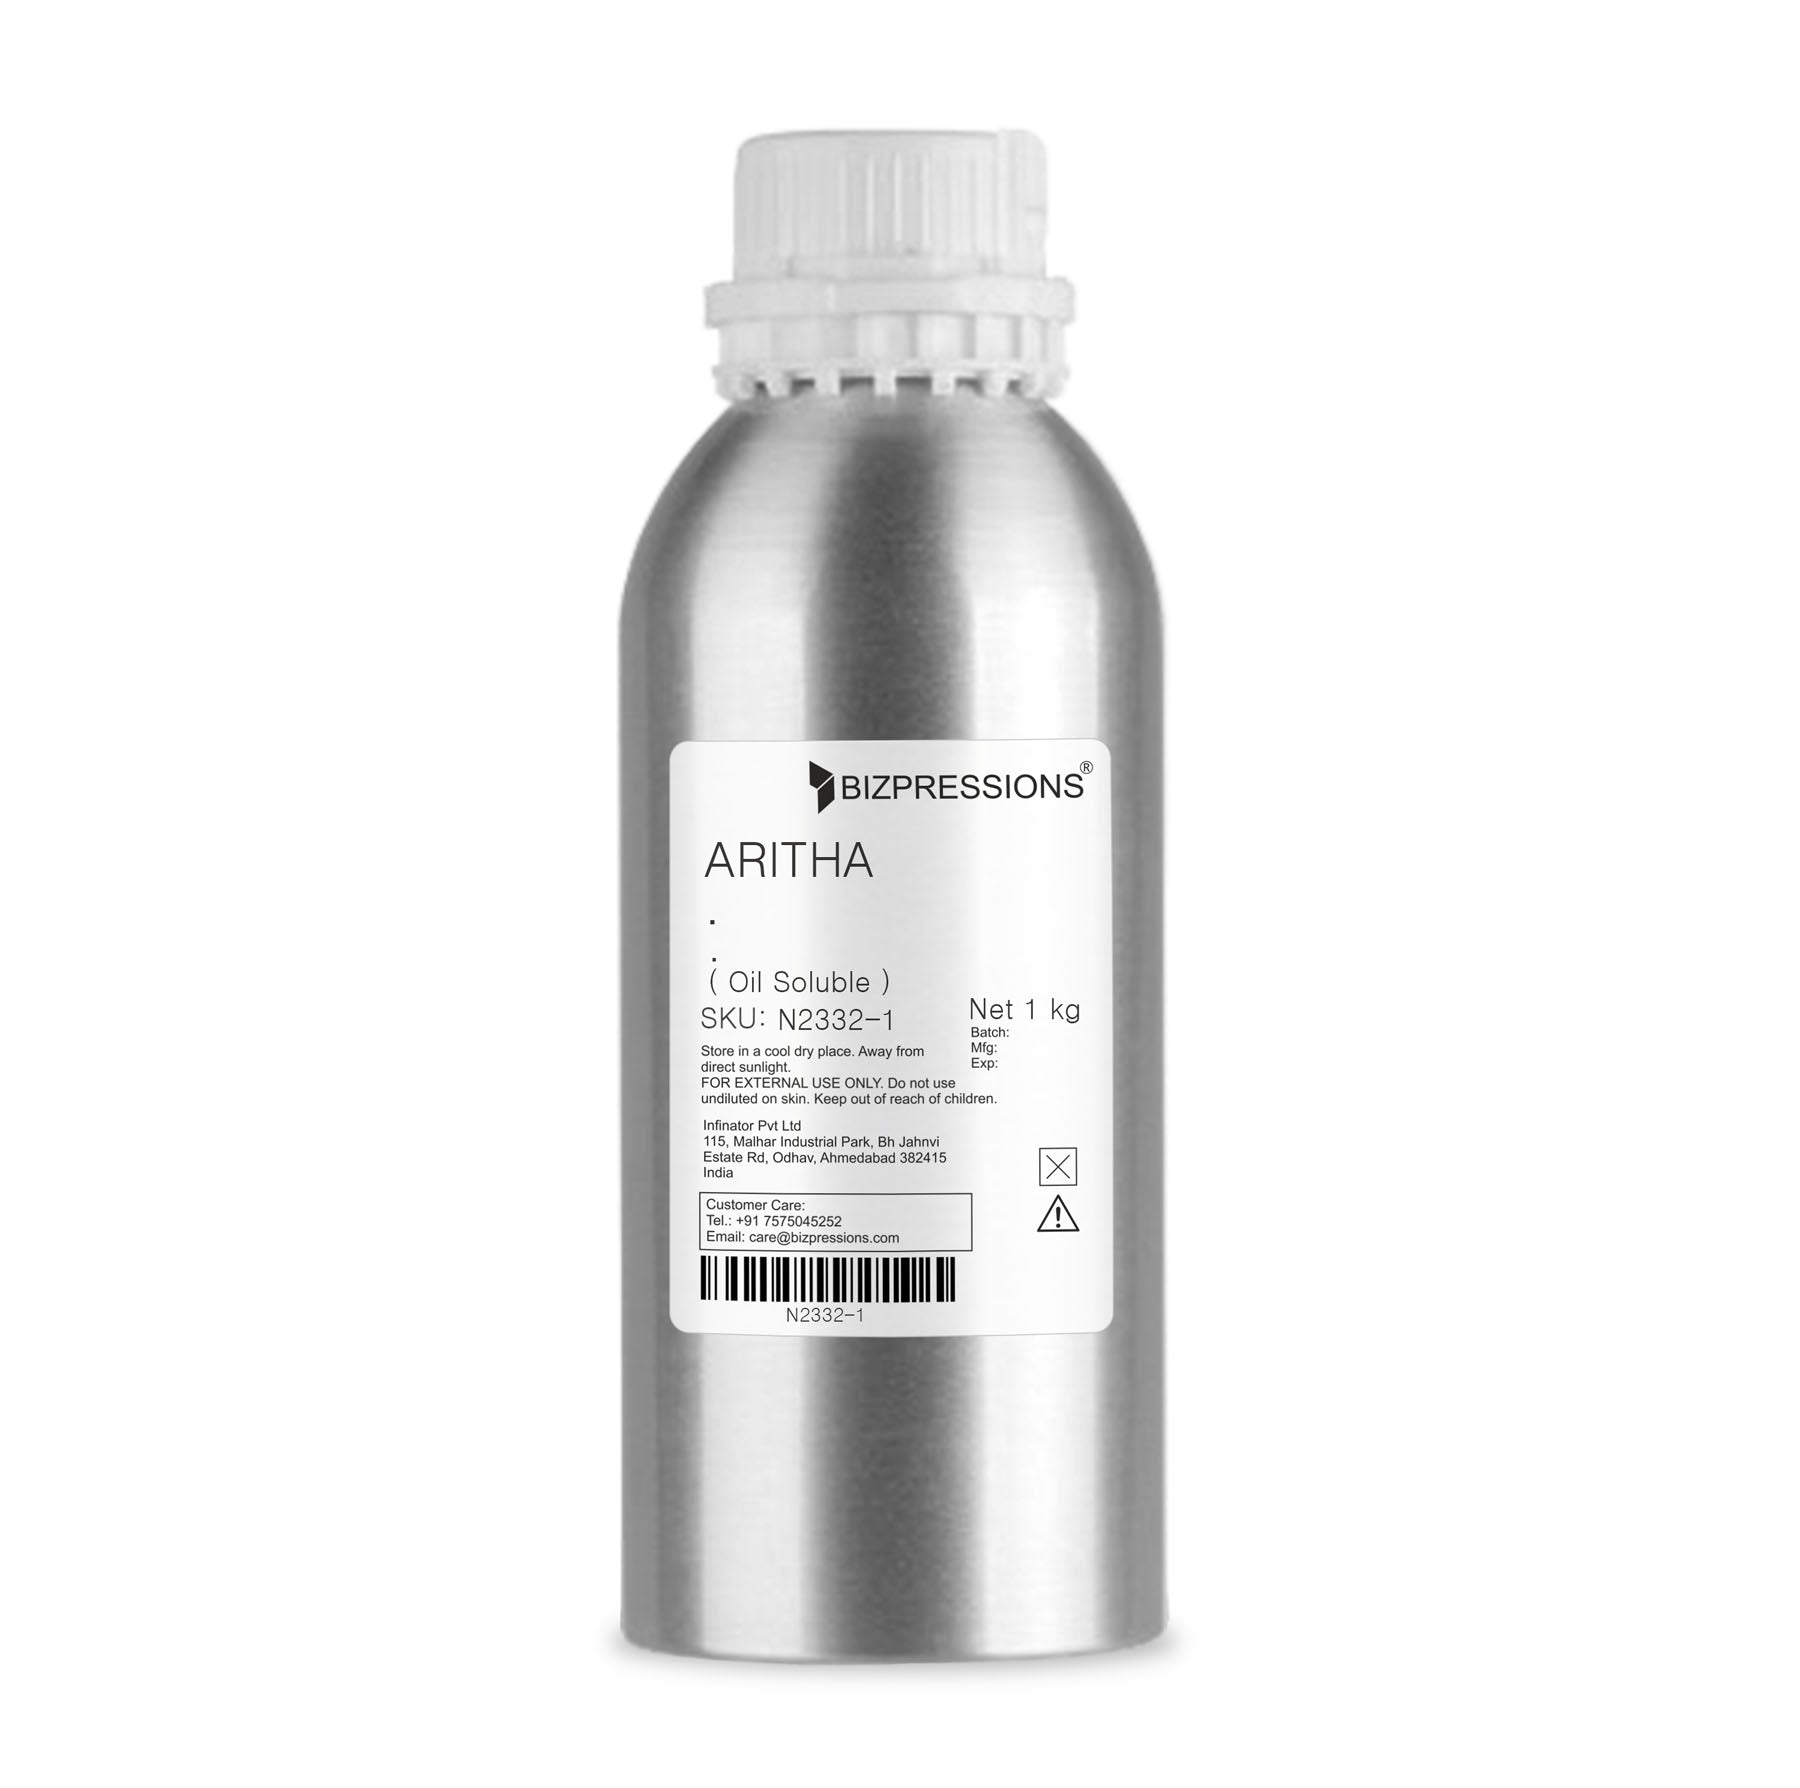 ARITHA - Fragrance ( Oil Soluble ) - 1 kg